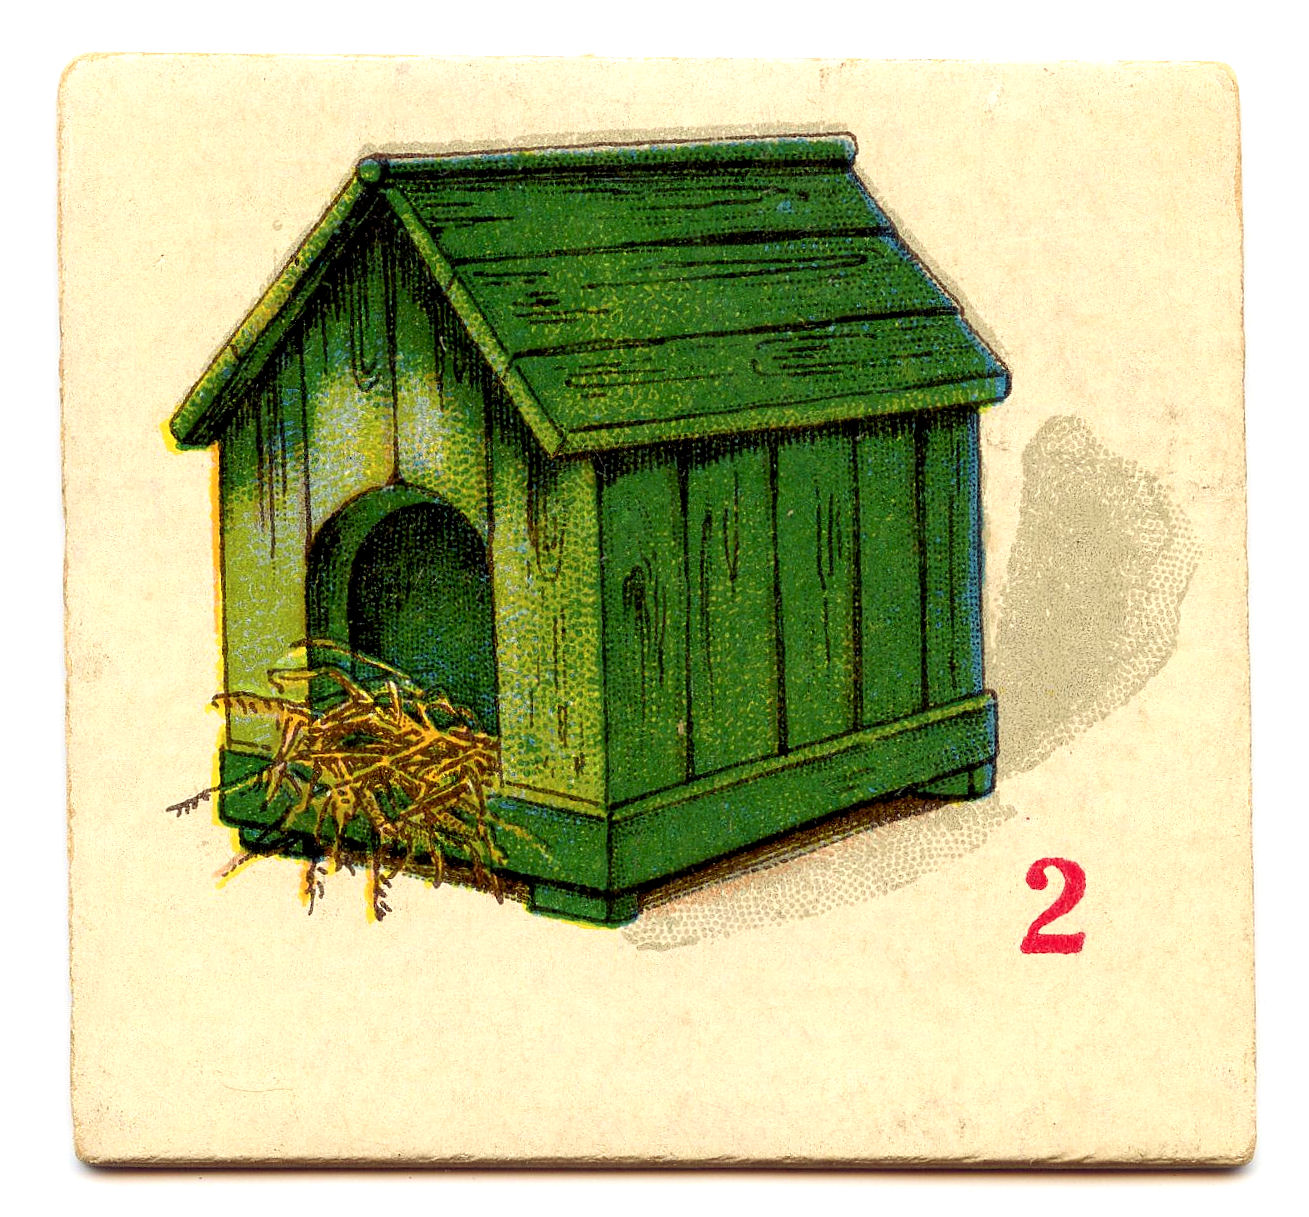 Free Clip Art - Vintage Game Cards - Dog House, Bike, Boat - The